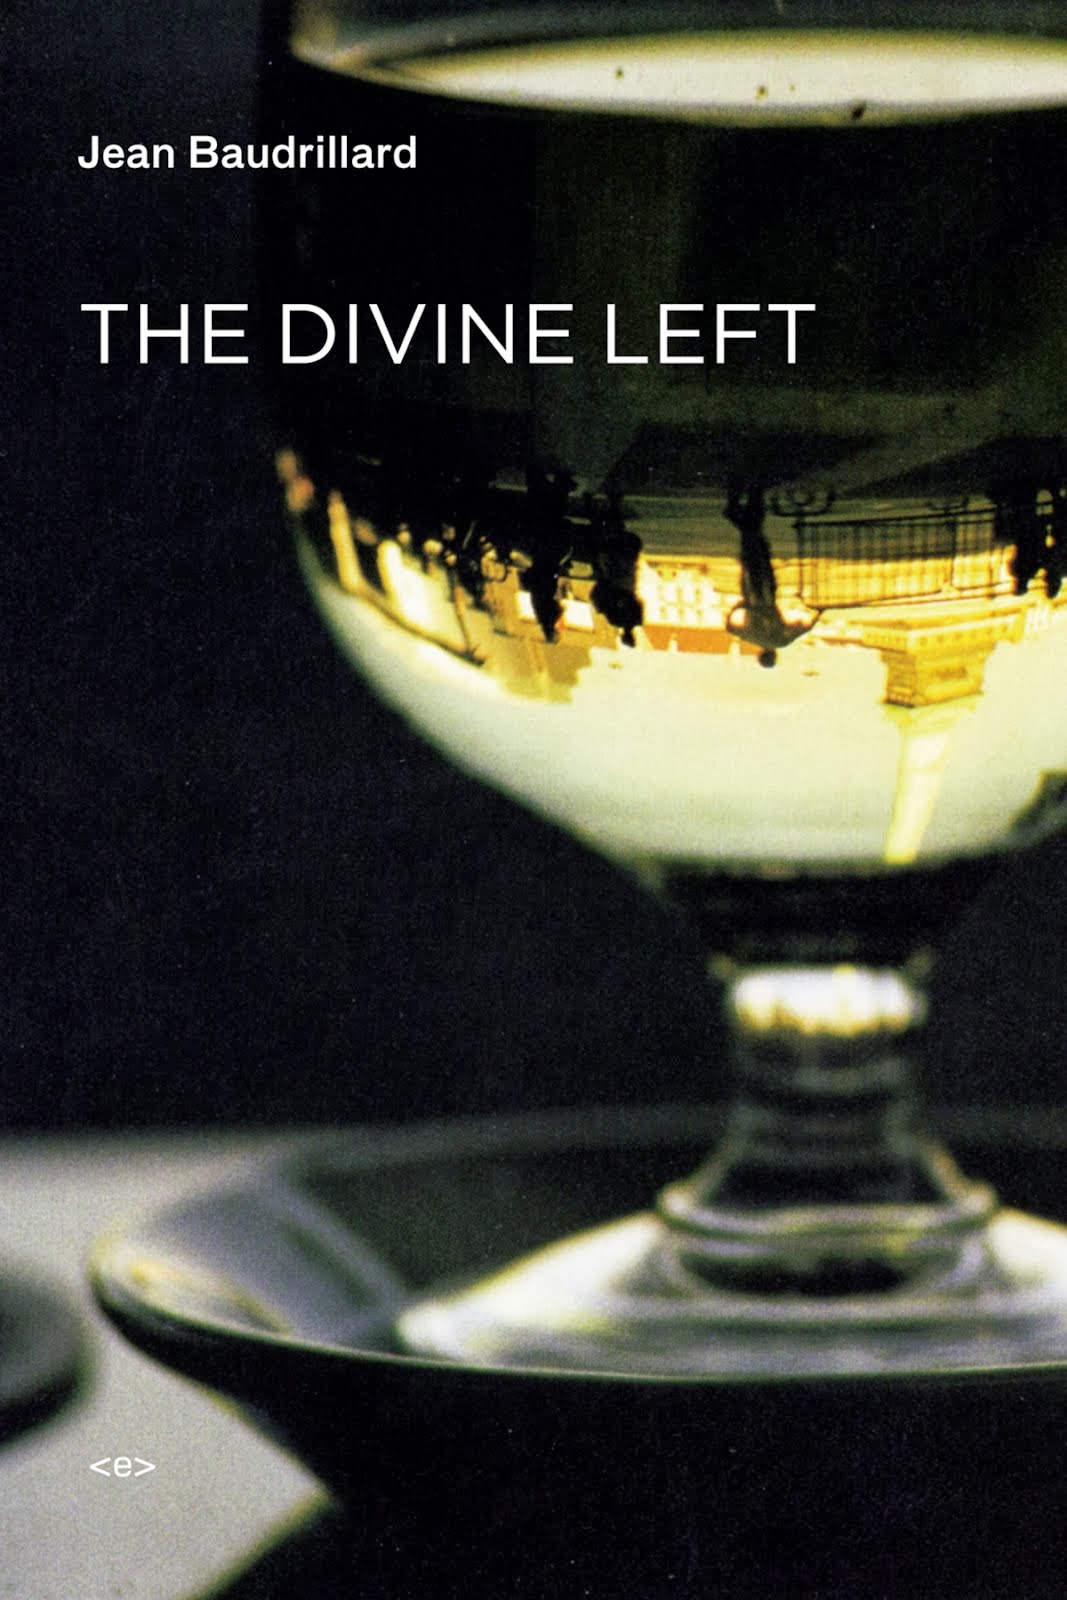 The Divine Left by Jean Baudrillard (trans., D. L. Sweet)